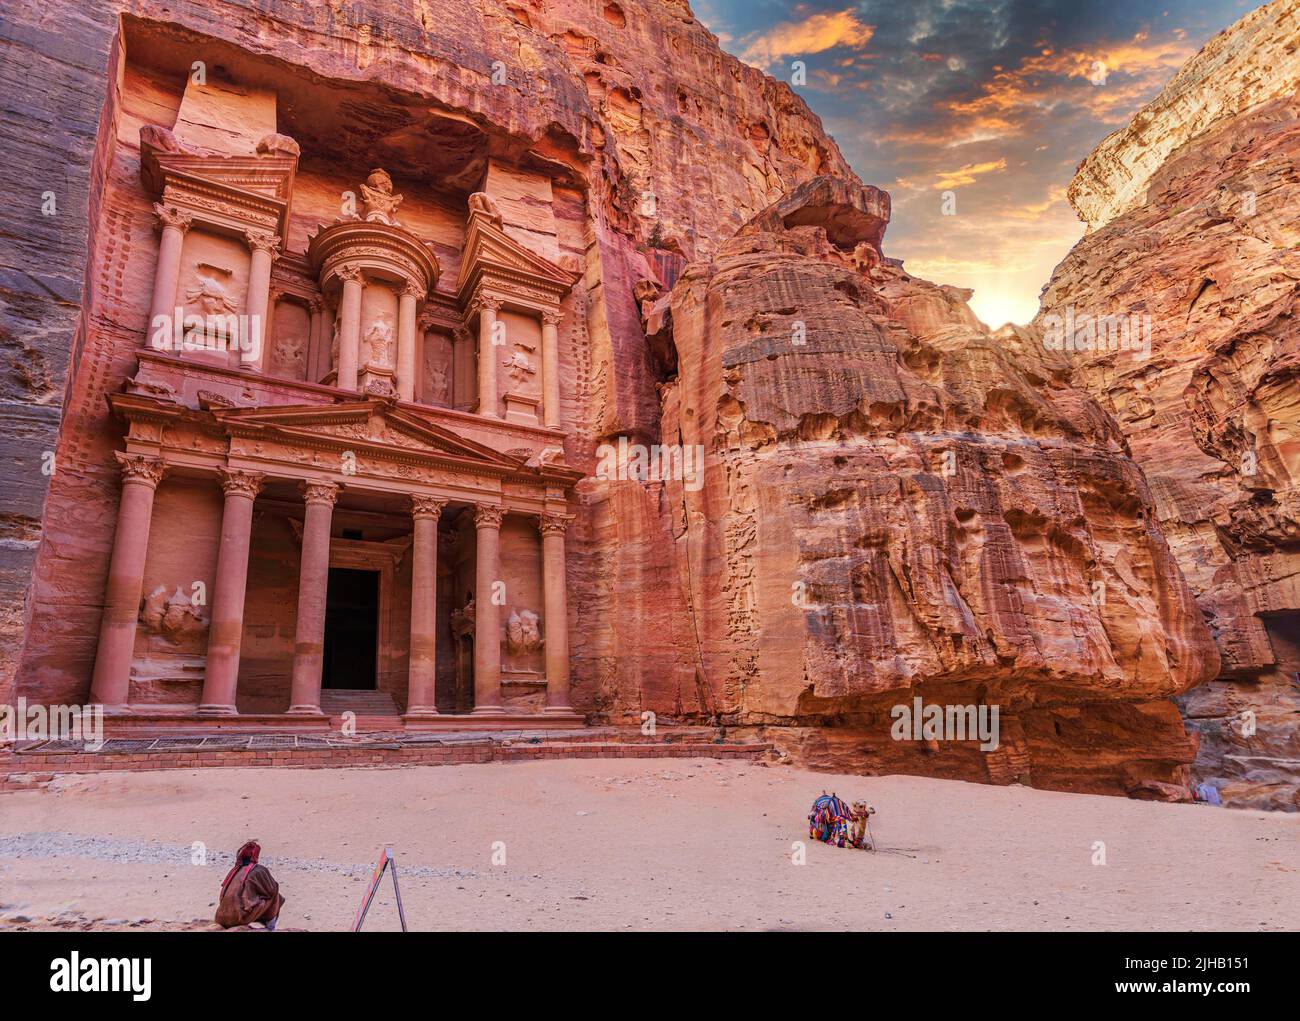 The amazing Khazneh or Treasury Temple in Petra, Jordan Stock Photo